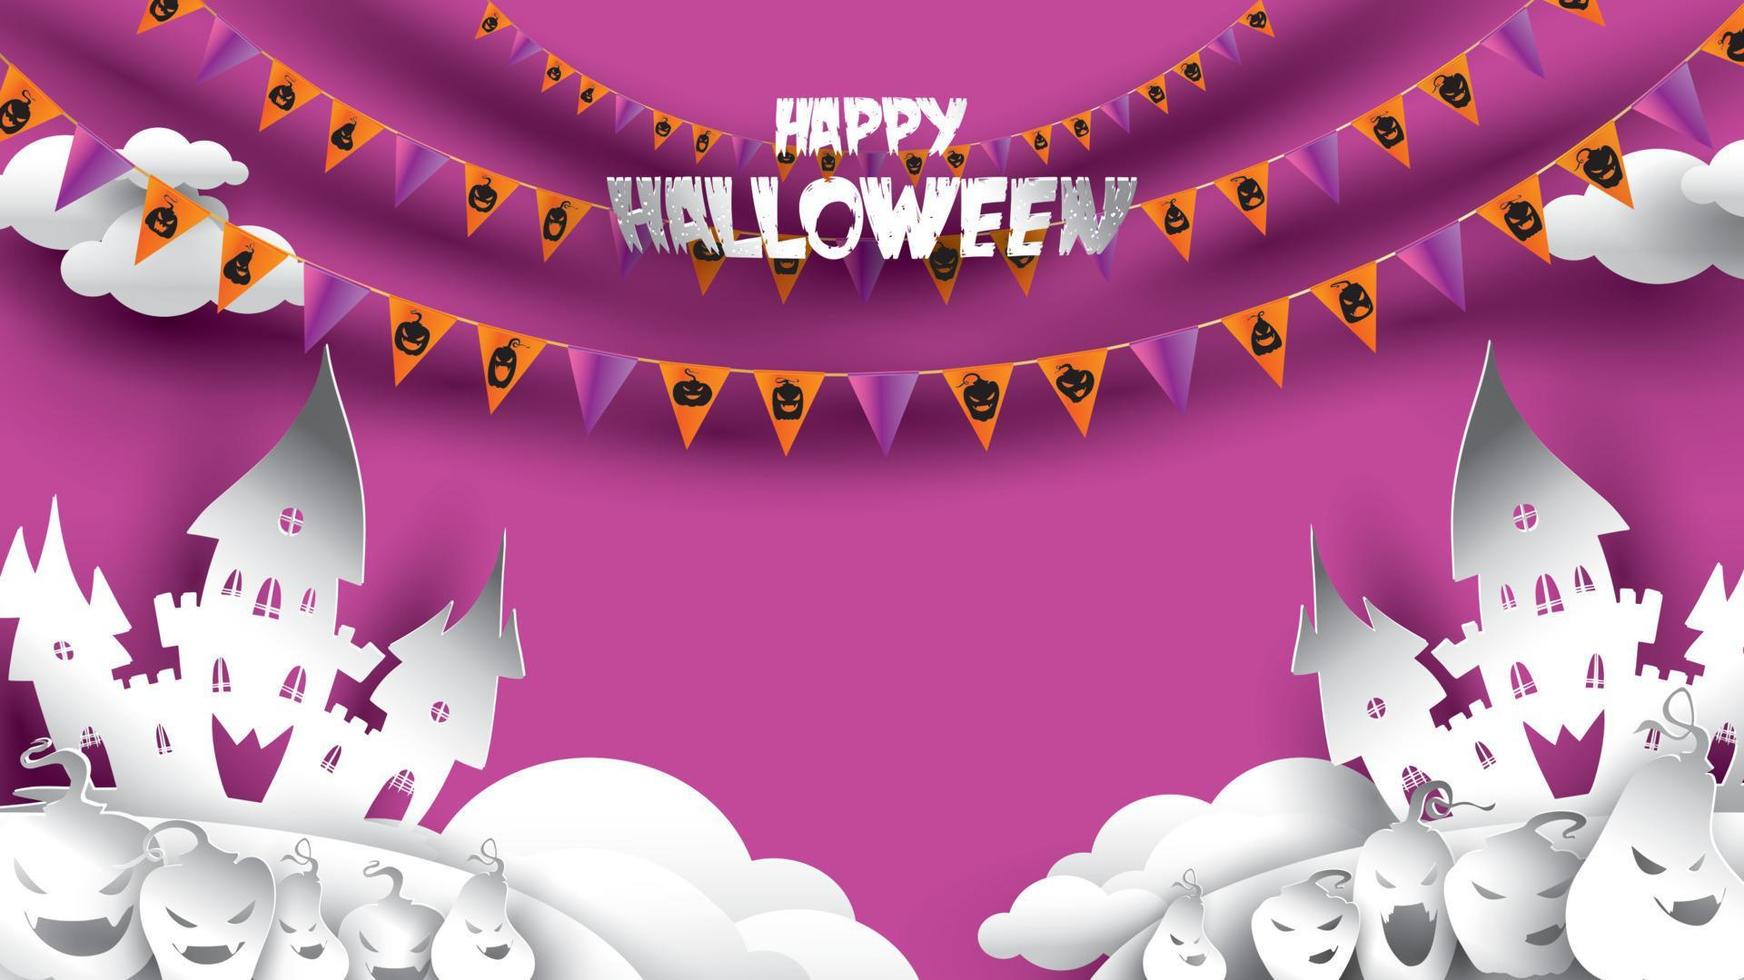 halloween bakgrund med pumpa, spökhus och fullmåne i papperskonst carving stil. banner, affisch, flyer eller inbjudningsmall fest. vektor illustration.